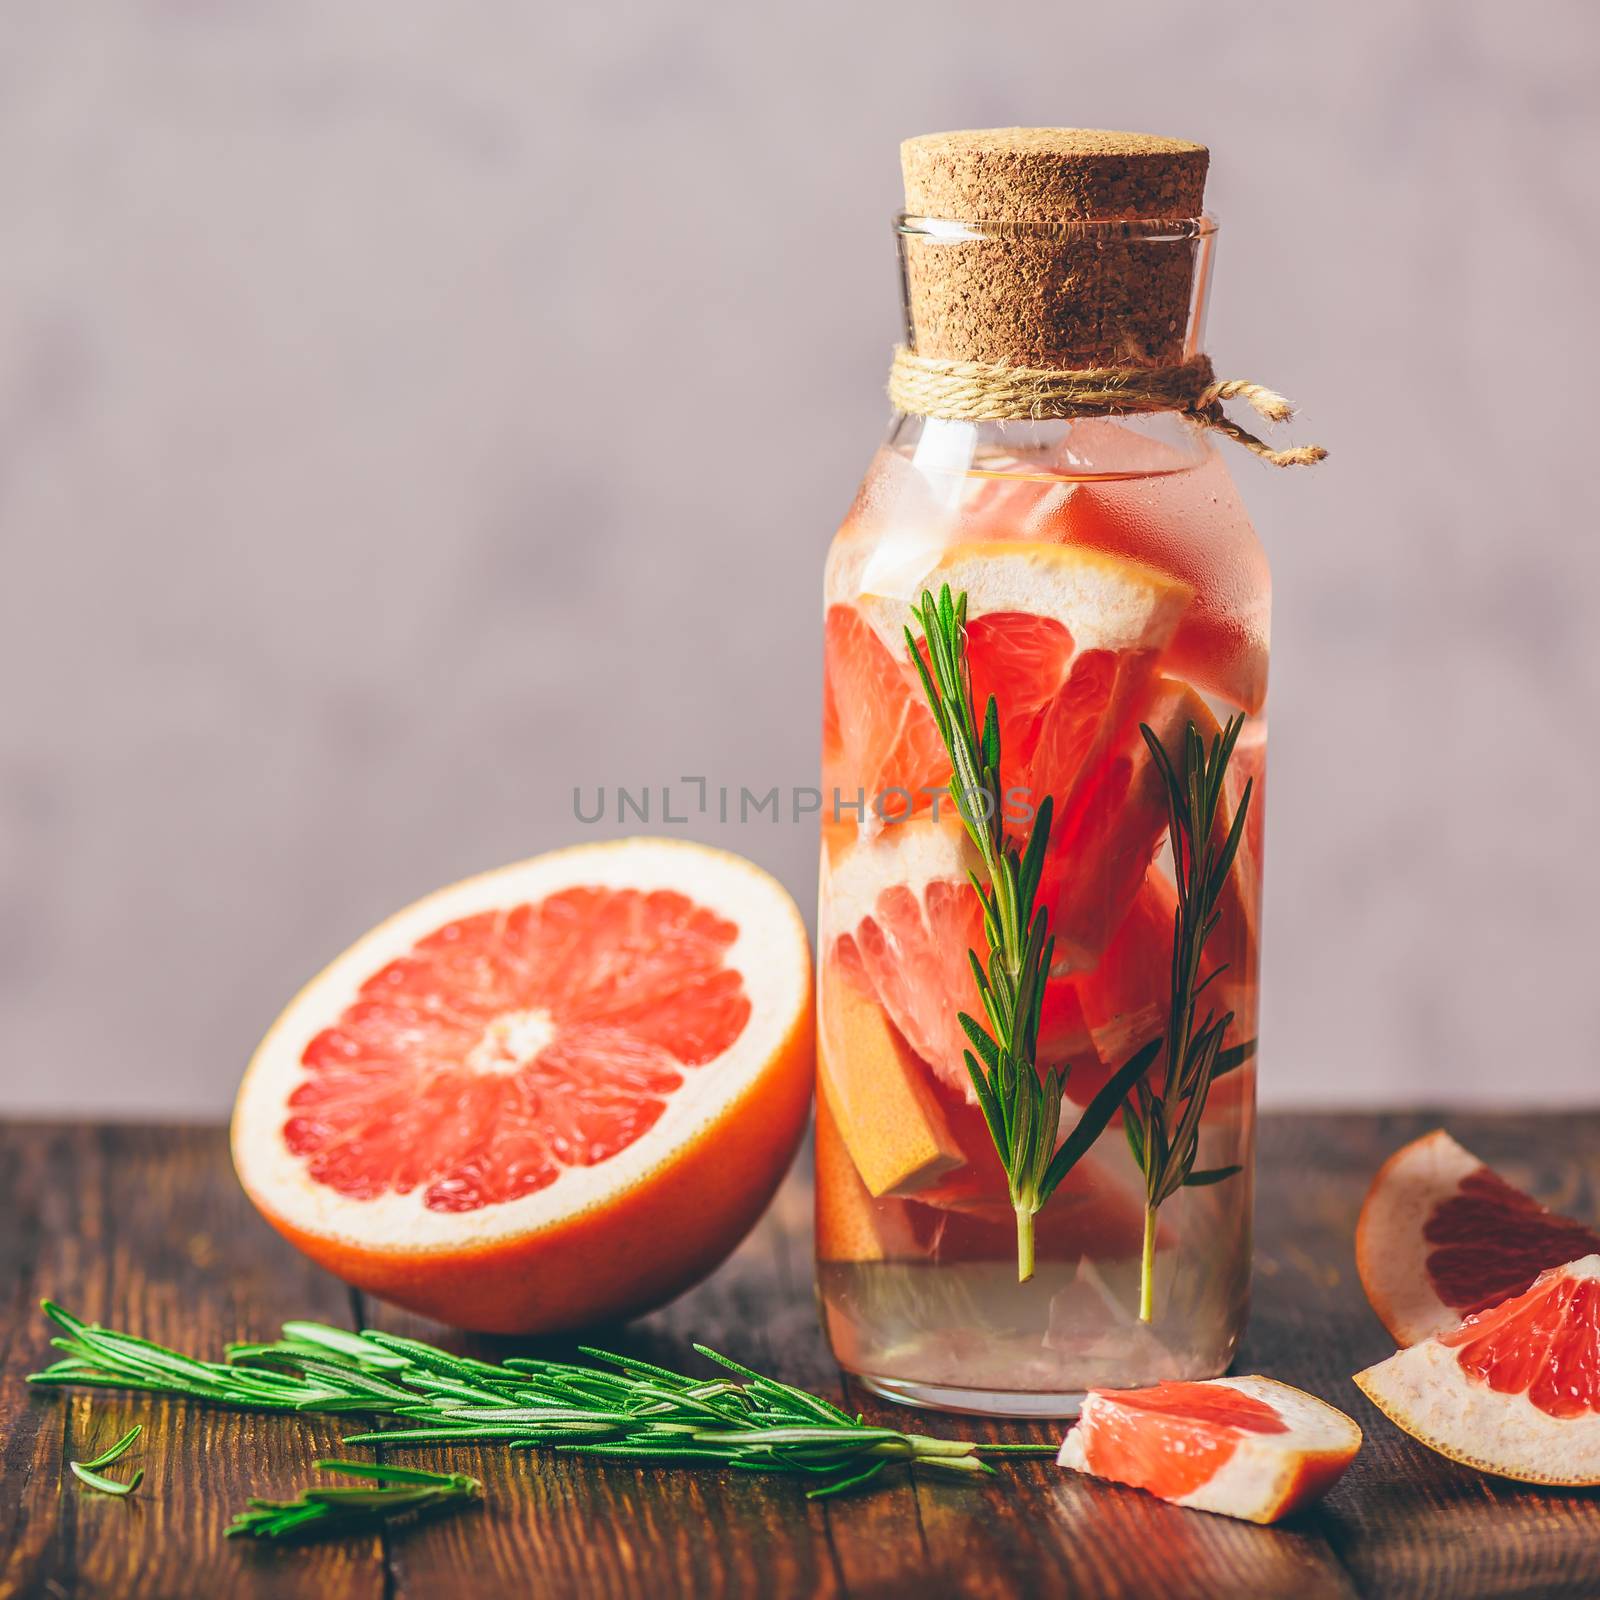 Detox Water with Grapefruit and Rosemary. by Seva_blsv